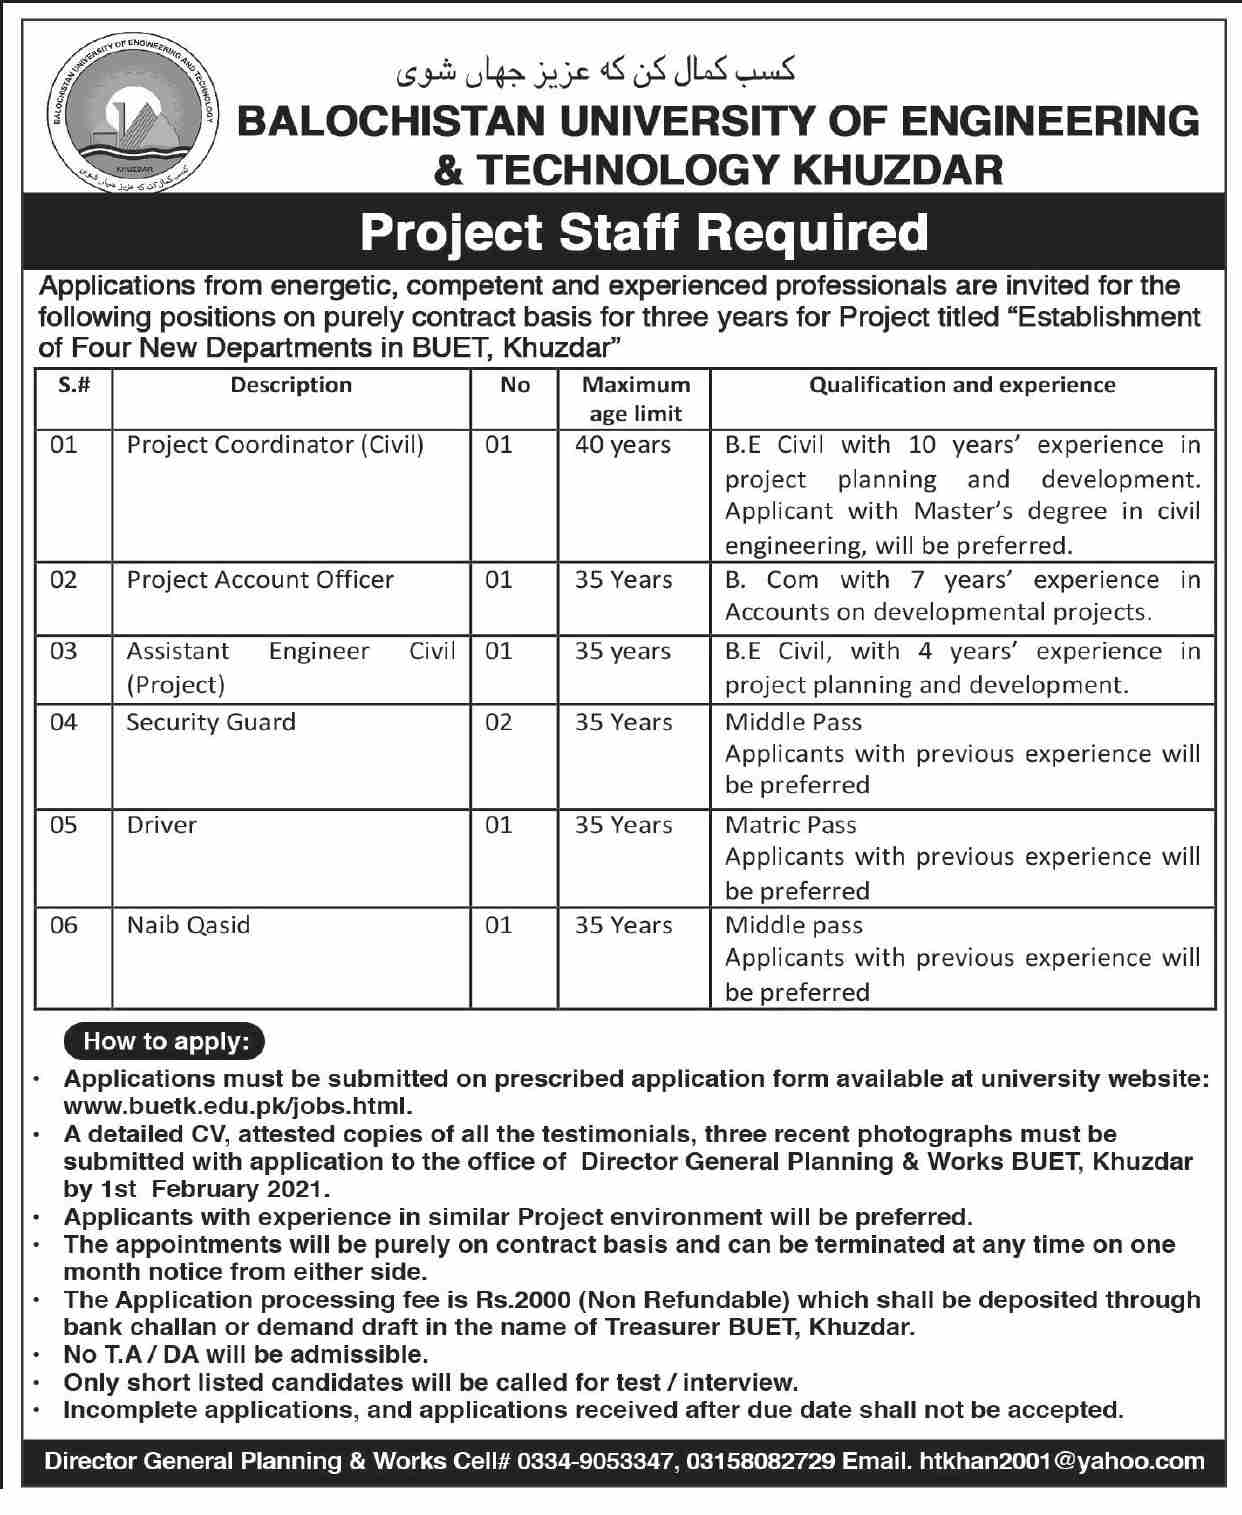 Balochistan University of Engineering and Technology Jobs 2021 - BUET Jobs 2021 - Application Form - www.buetk.edu.pk/jobs.html